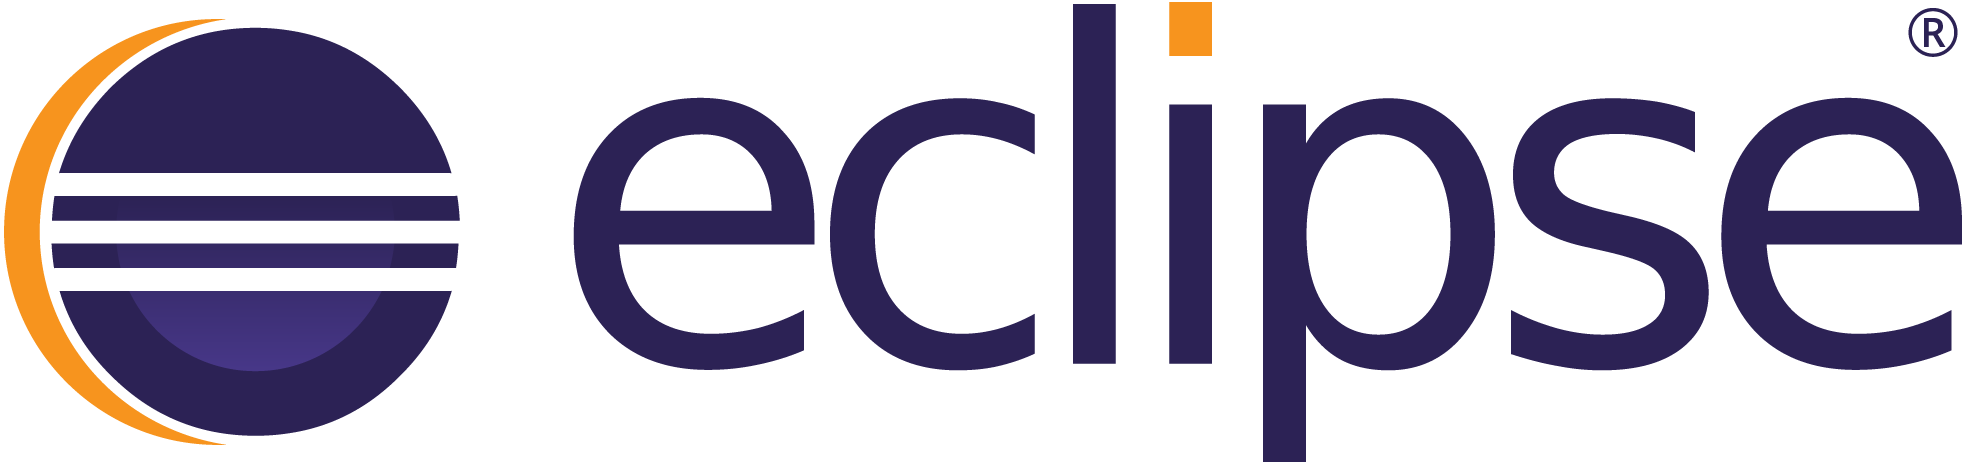 Eclipse IDE Logo Official Download